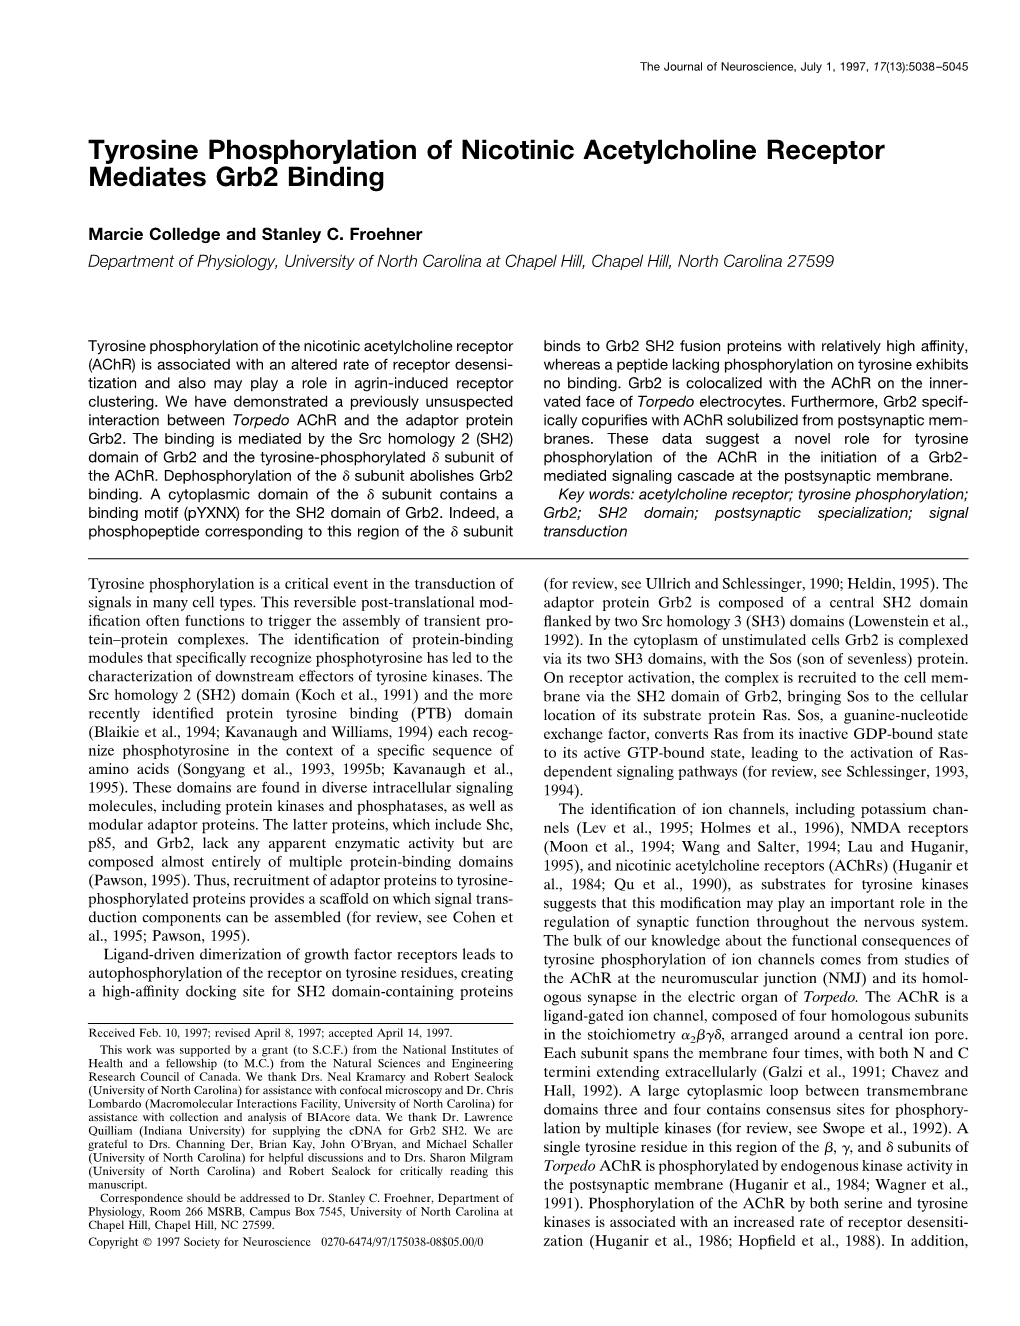 Tyrosine Phosphorylation of Nicotinic Acetylcholine Receptor Mediates Grb2 Binding